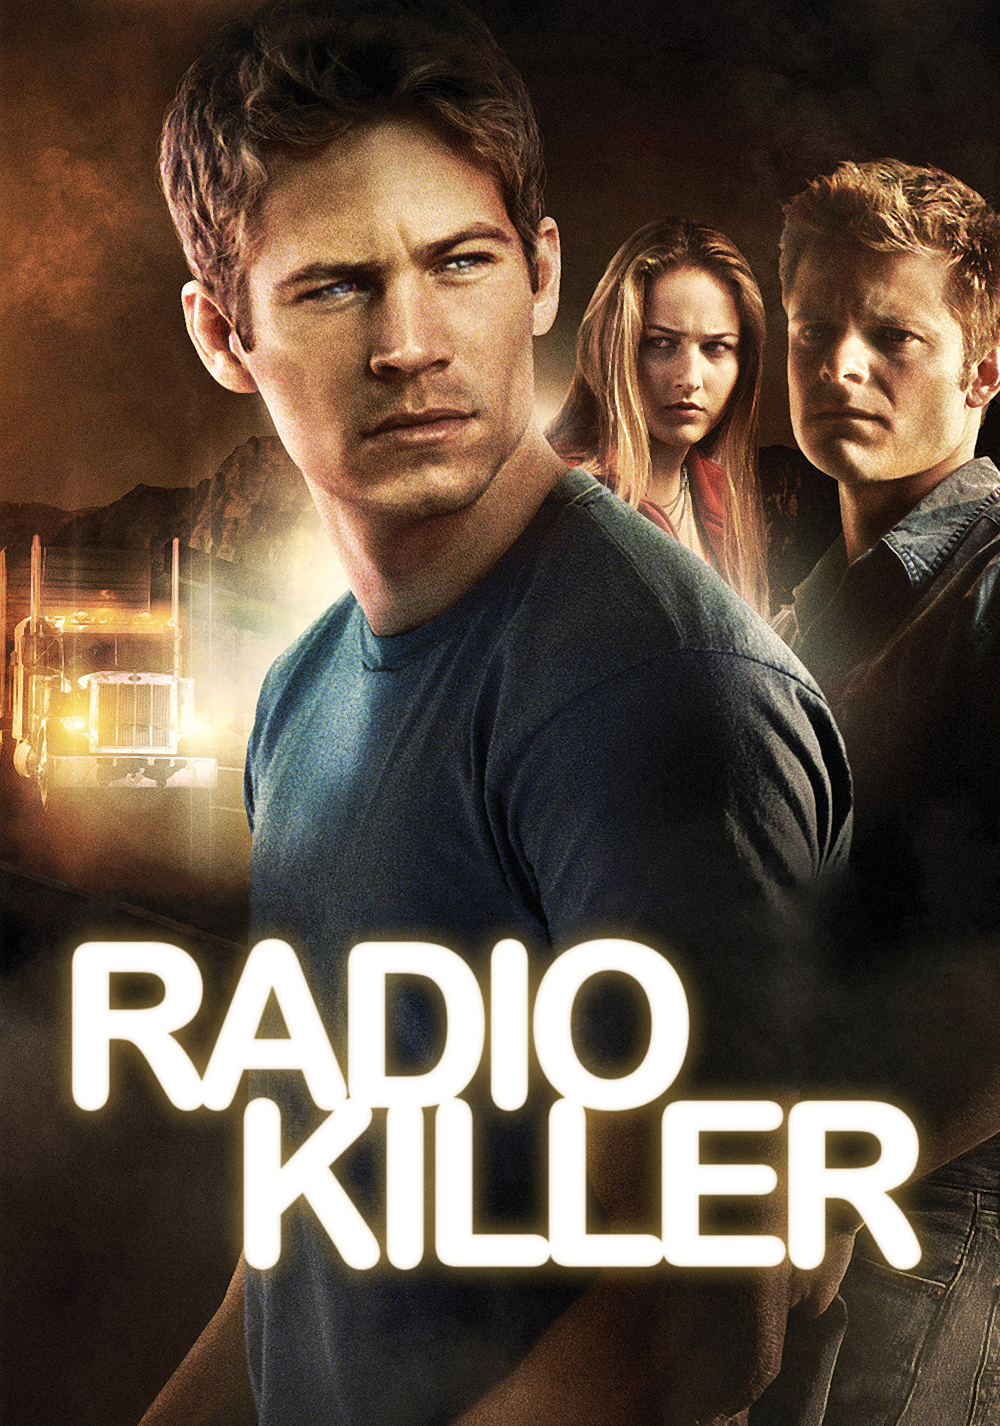 Radio killer [HD] (2001)